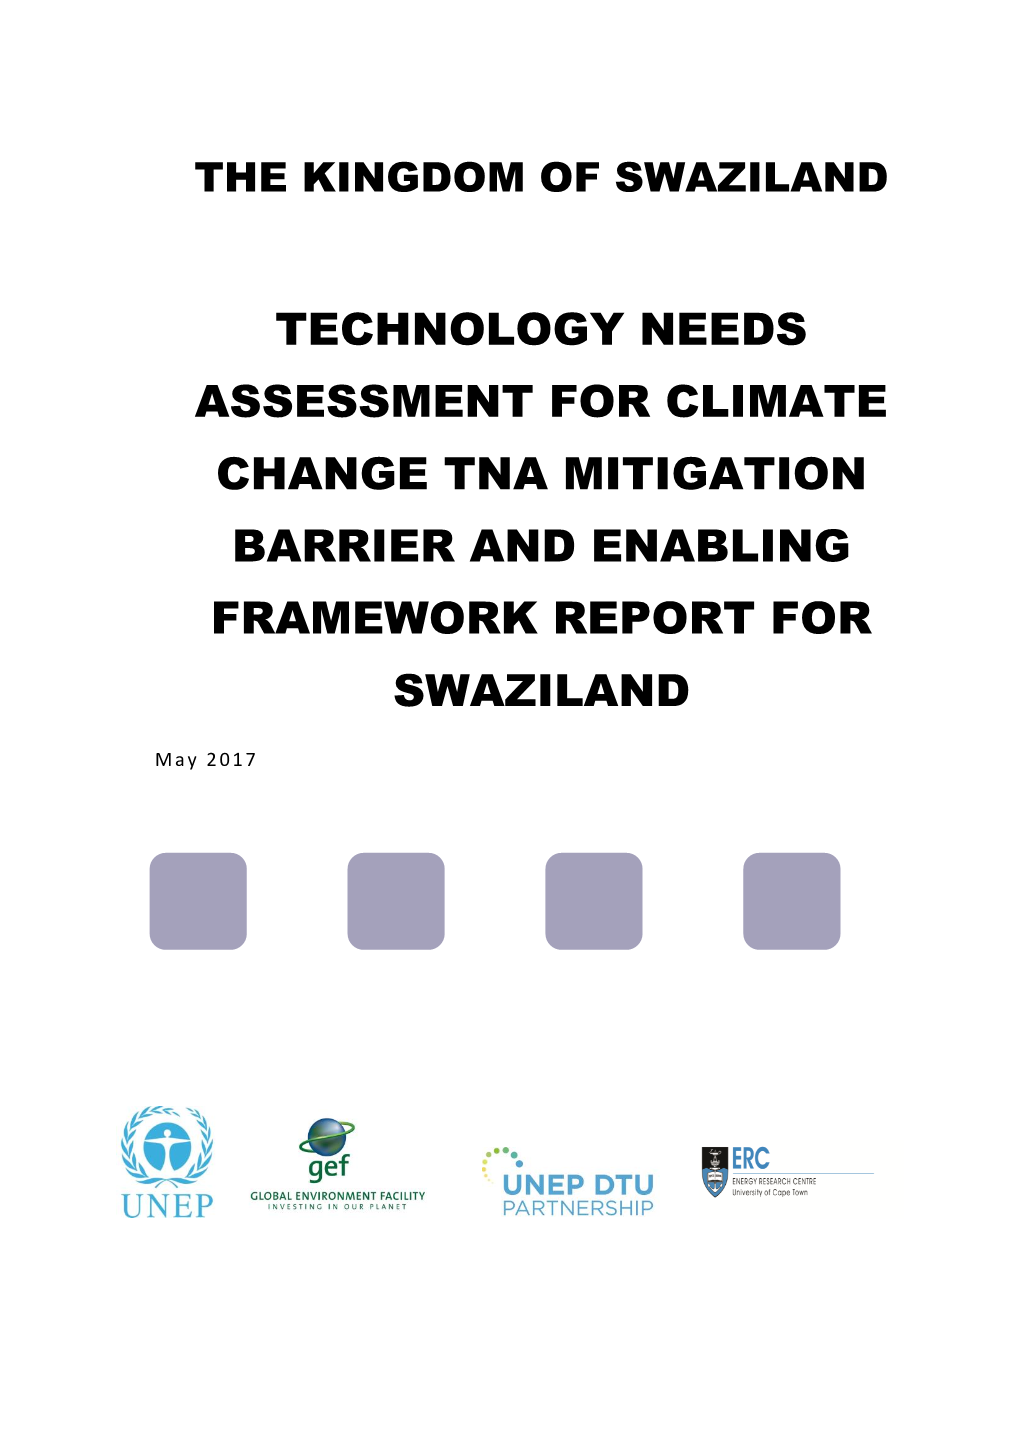 Technology Needs Assessment for Climate Change Tna Mitigation Barrier and Enabling Framework Report for Swaziland